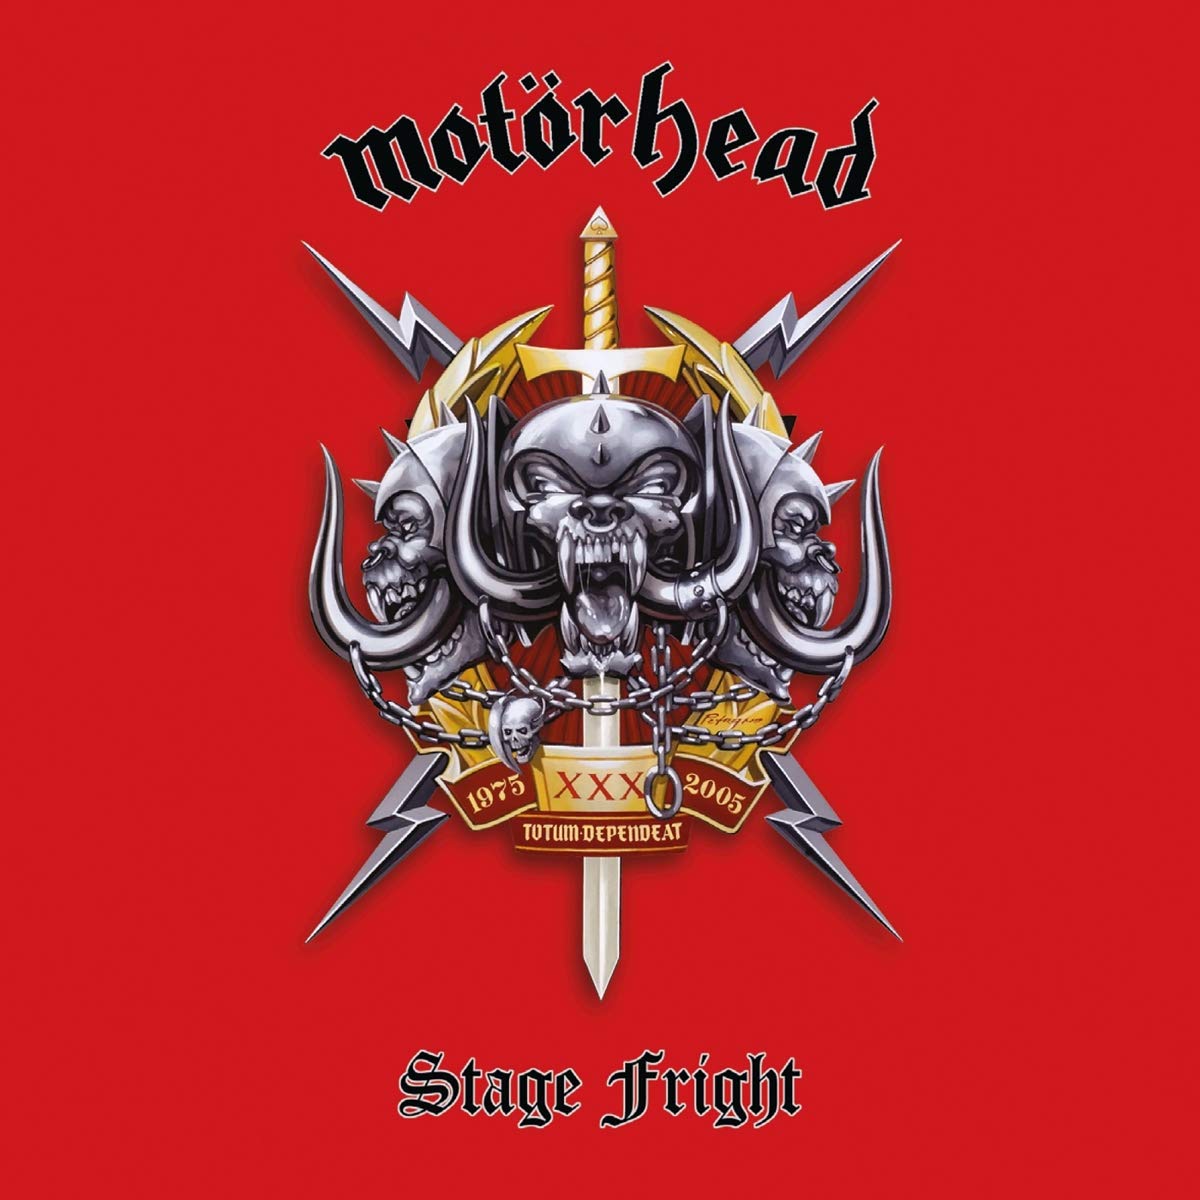 Motörhead "Stage Fright" CD/DVD